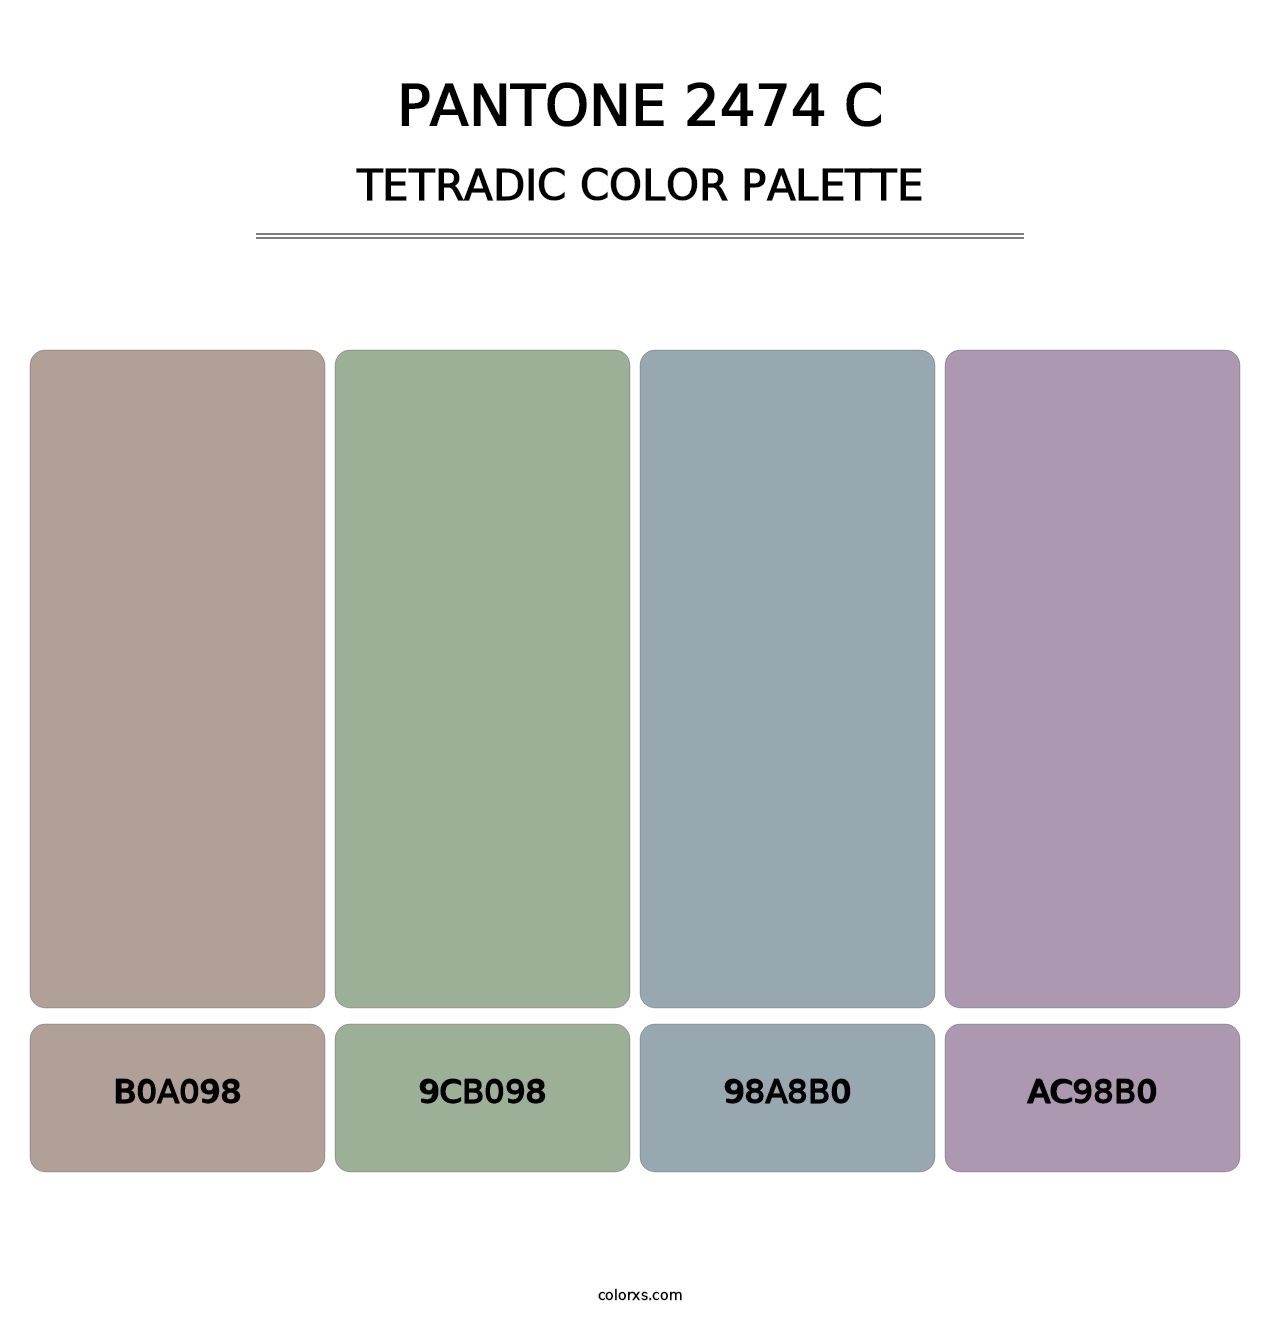 PANTONE 2474 C - Tetradic Color Palette